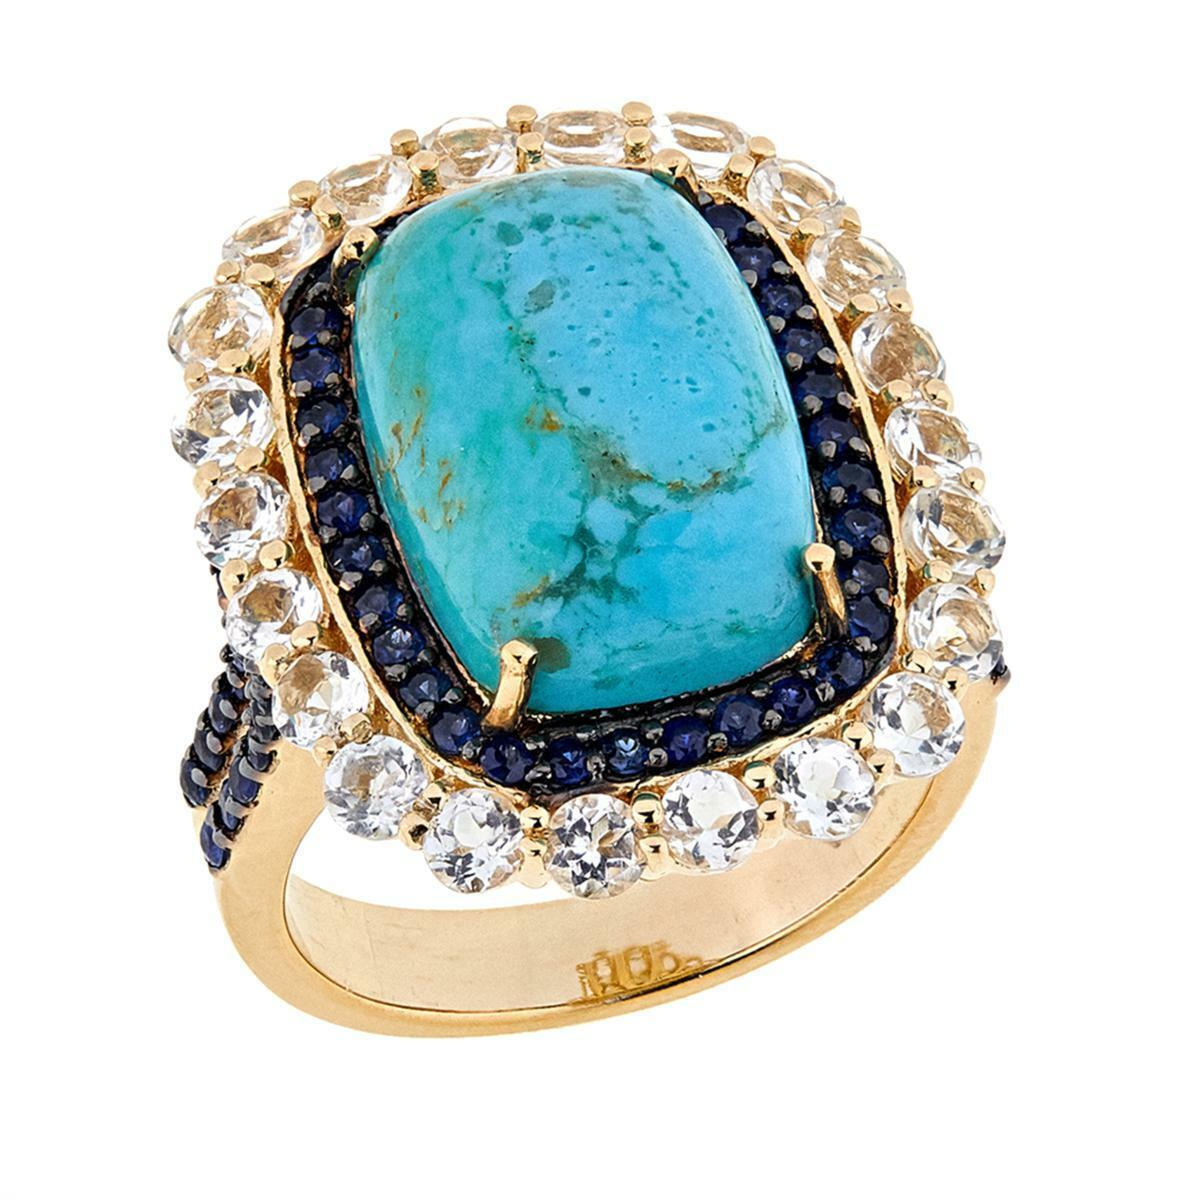 Paul Deasy Gem Kingman Turquoise, Sapphire And White Topaz Ring Size 7 Hsn $260